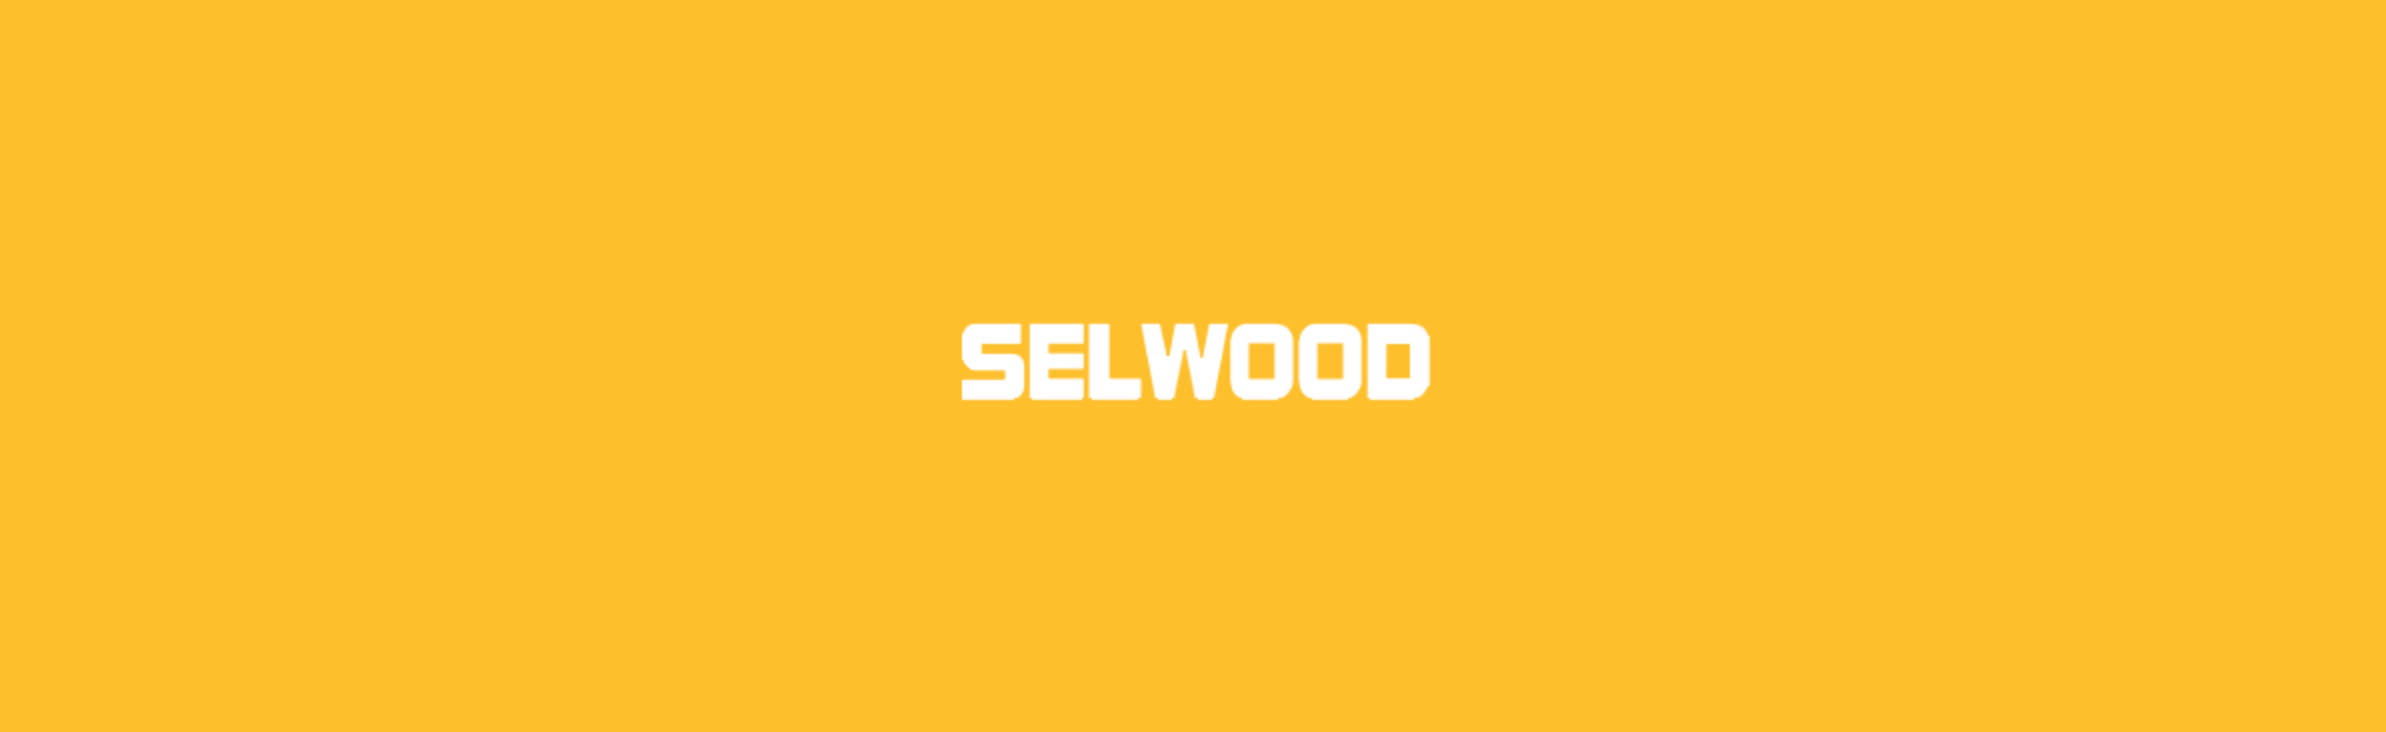 Selwood- wallpaper